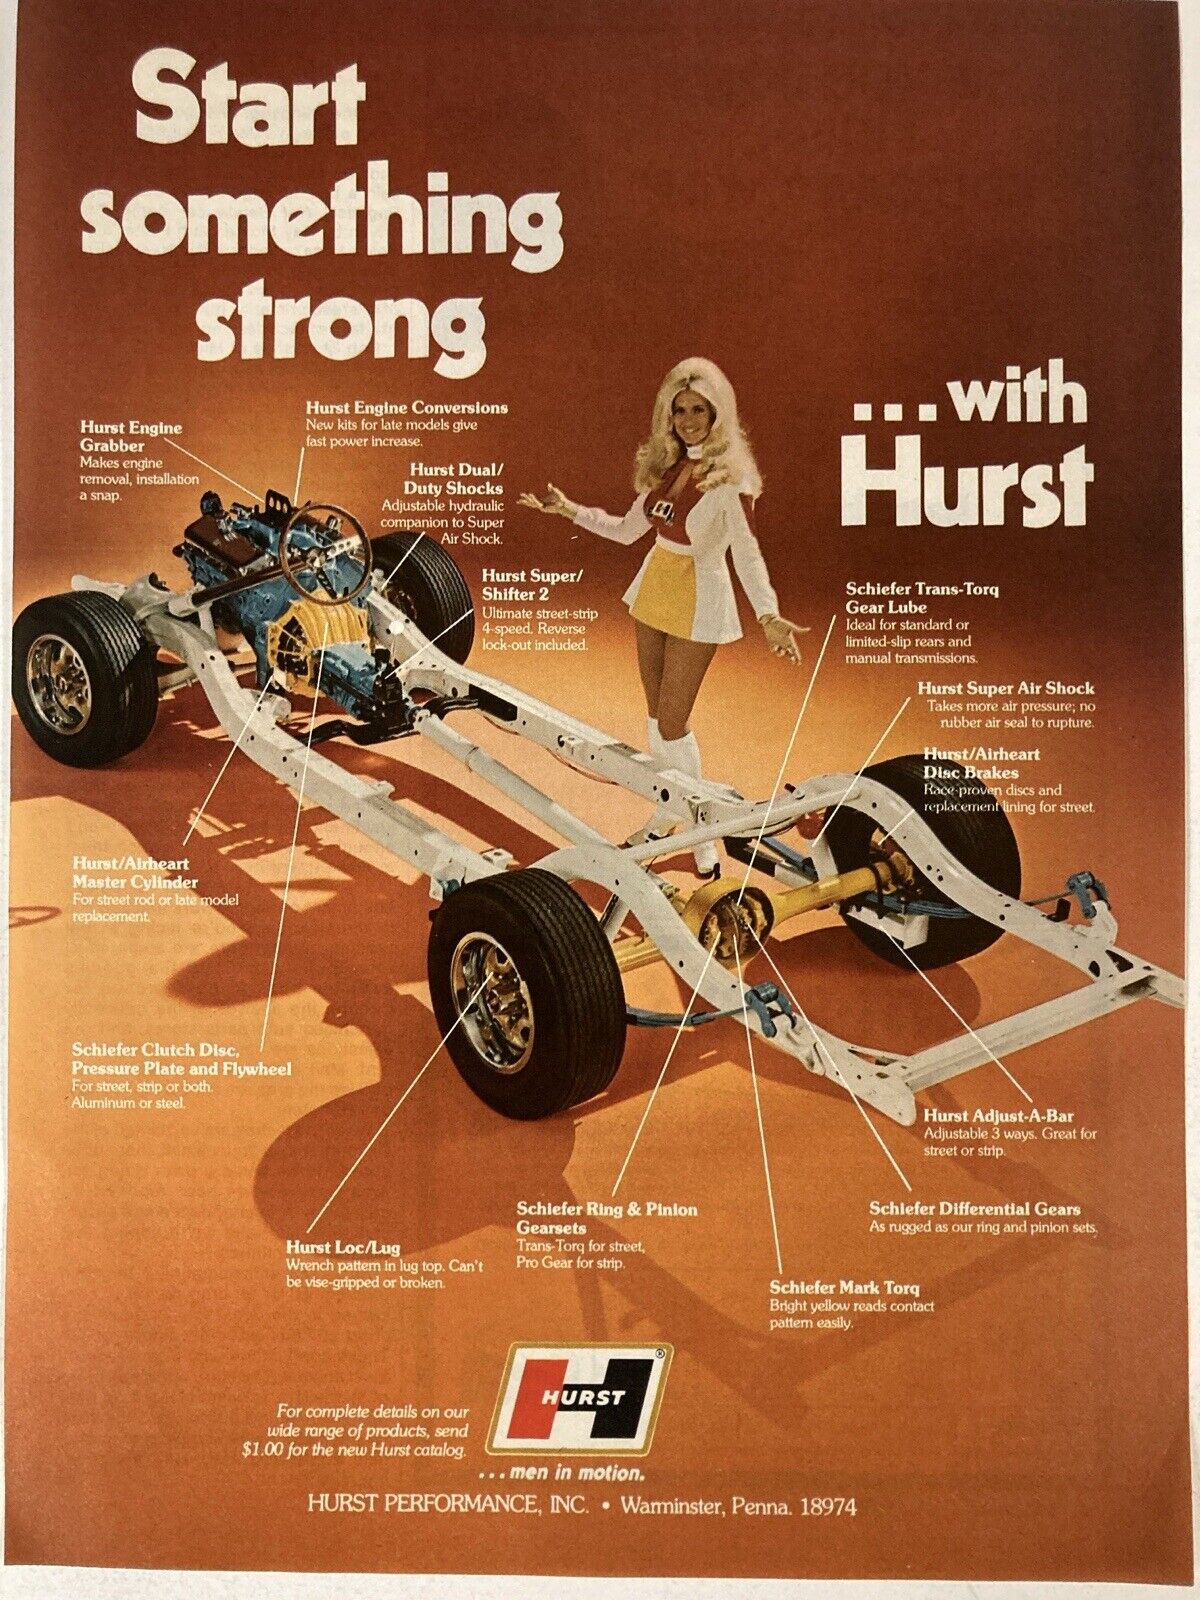 1973 Hurst Automobile Aftermarket Performance Print Ad Hurst Performance Inc.